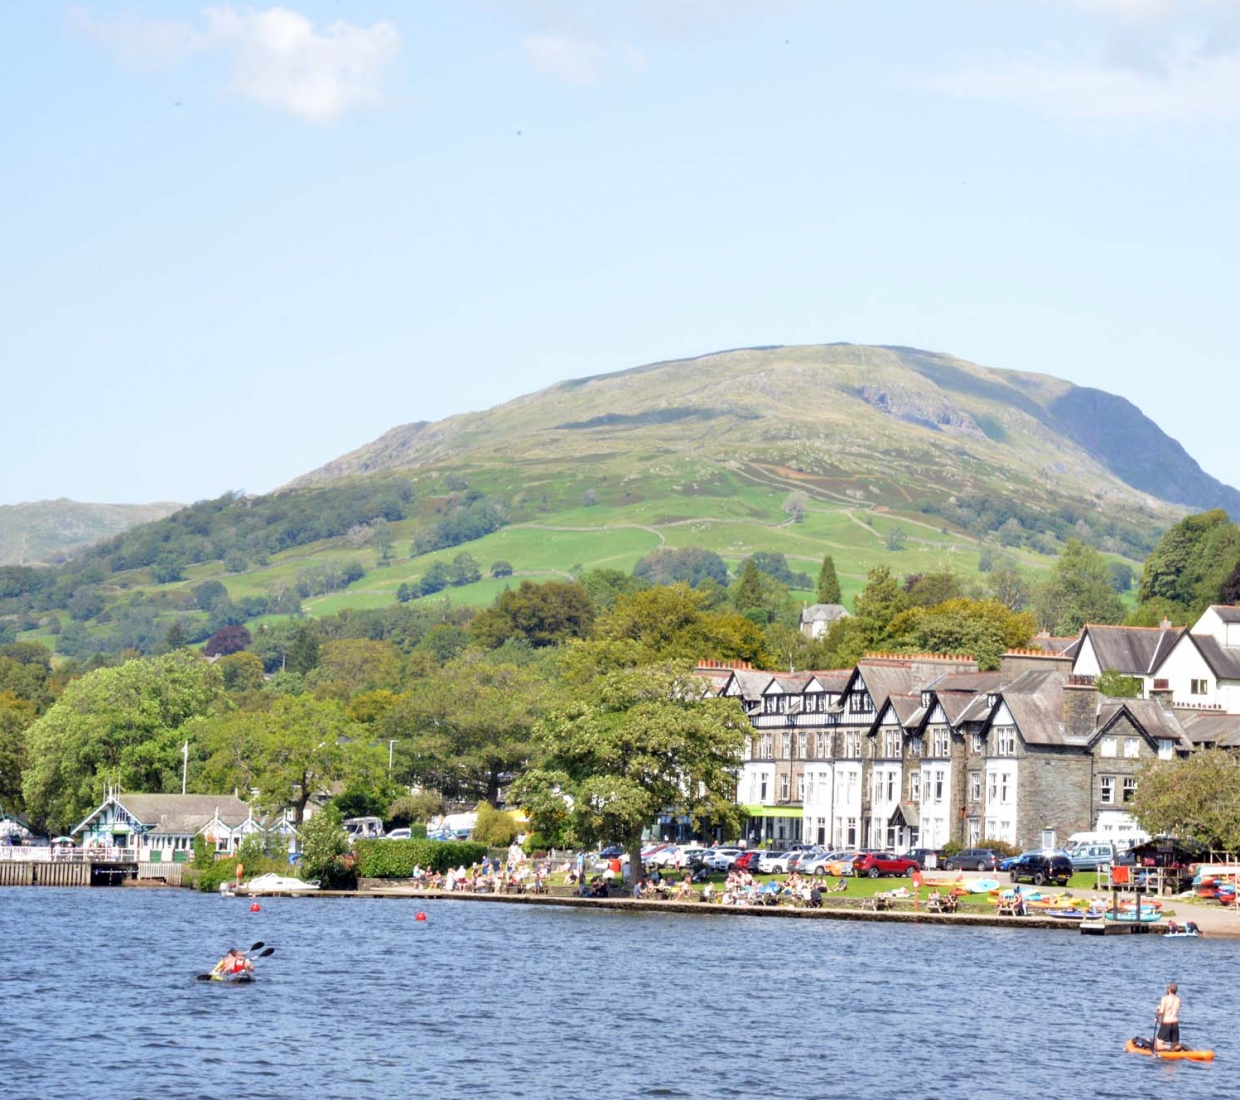 Hotéis boutique, hotéis de charme e turismo rural Cumbria and the Lake District